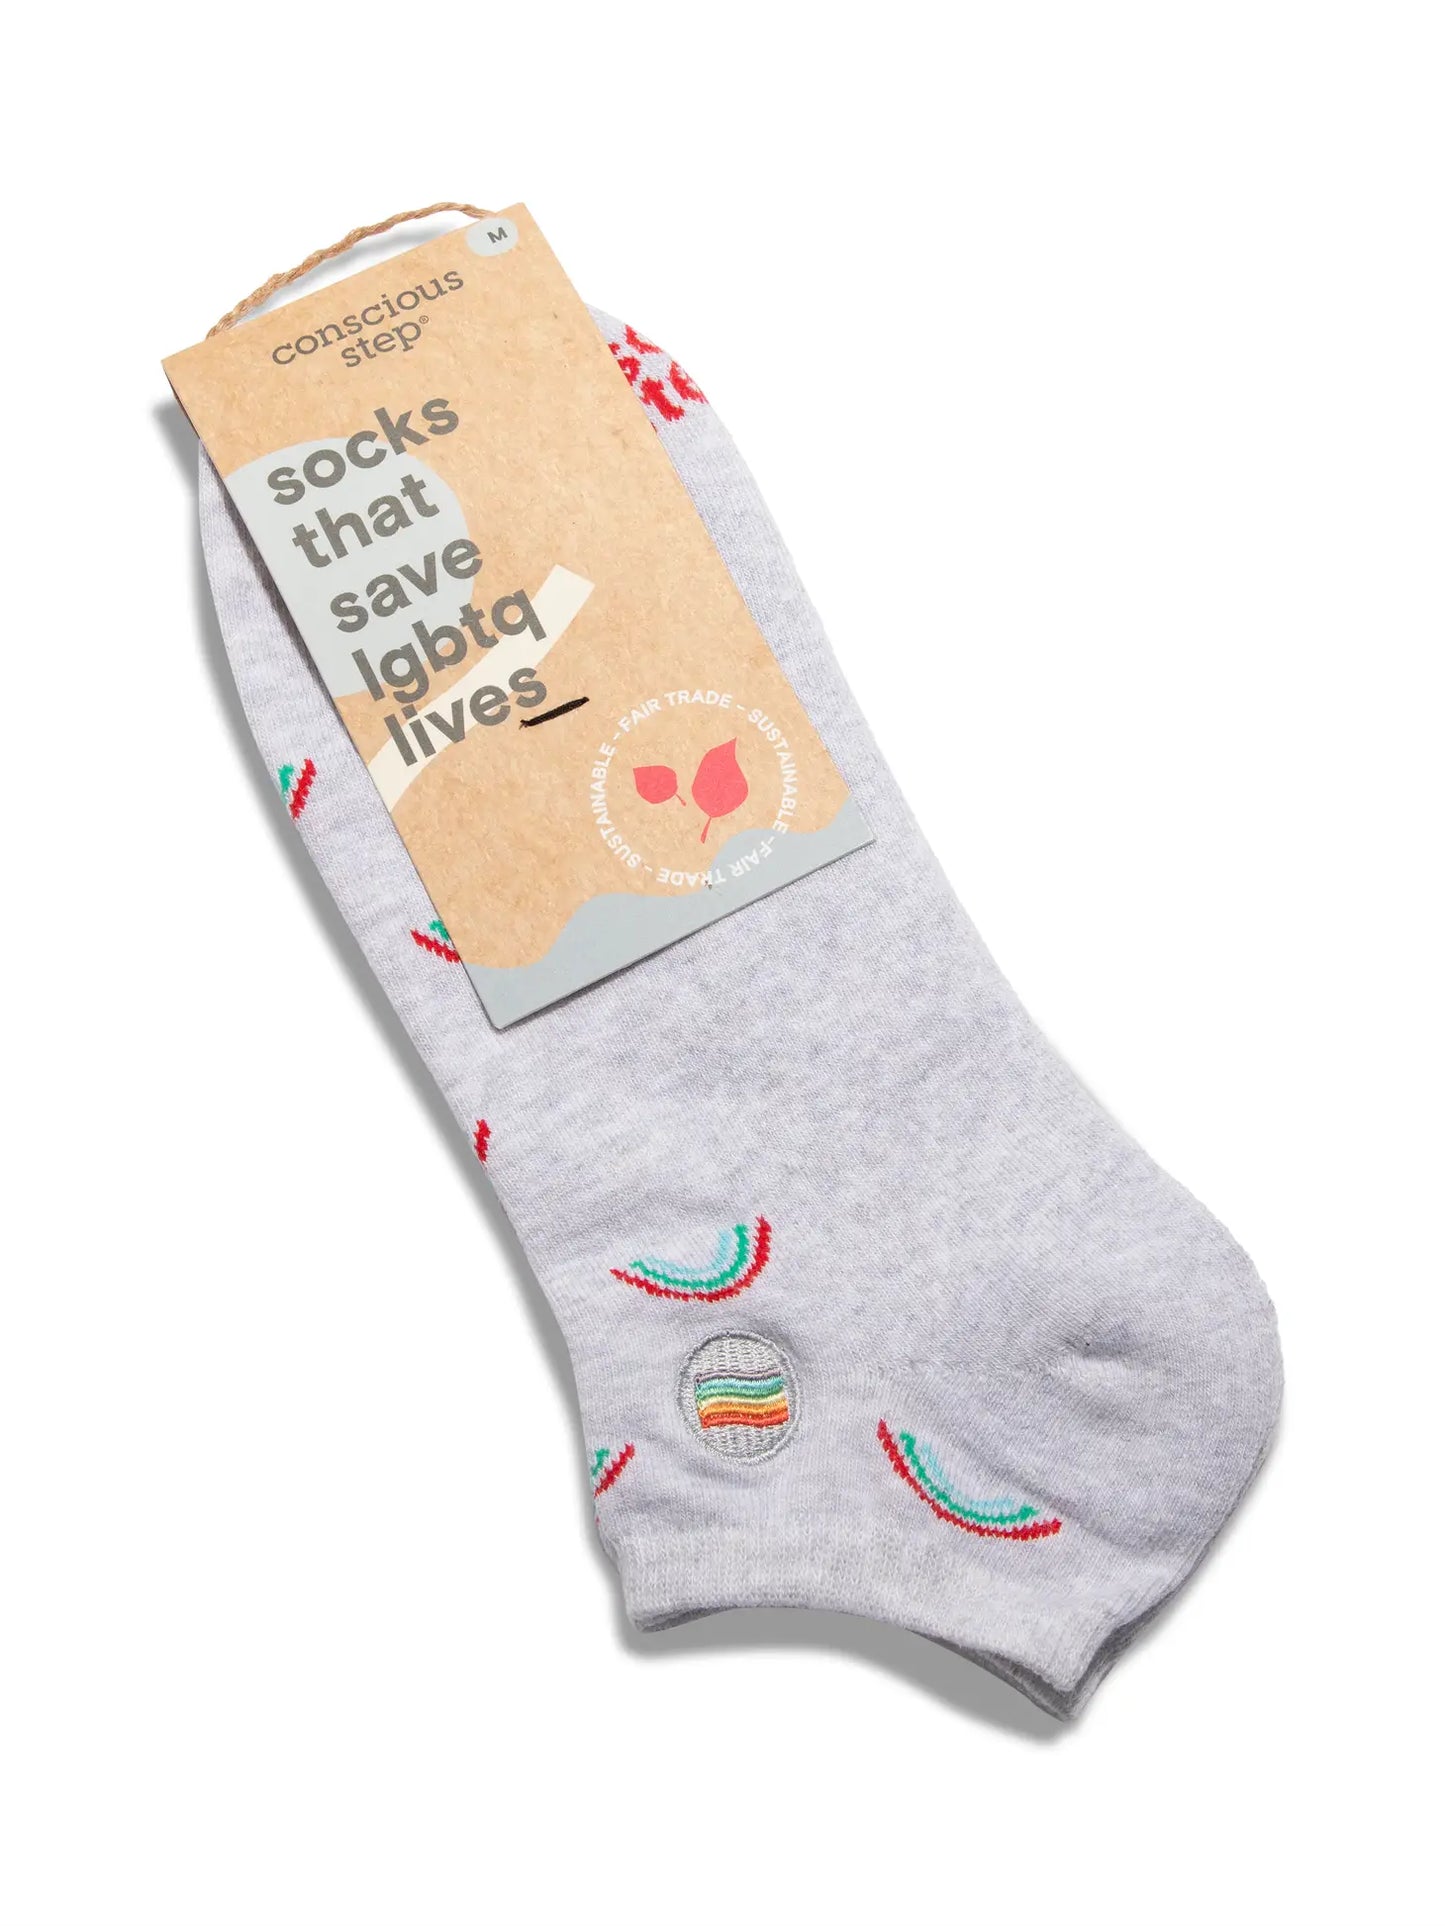 Conscious Step: Socks that Save LGBTQ Lives (Rainbow)